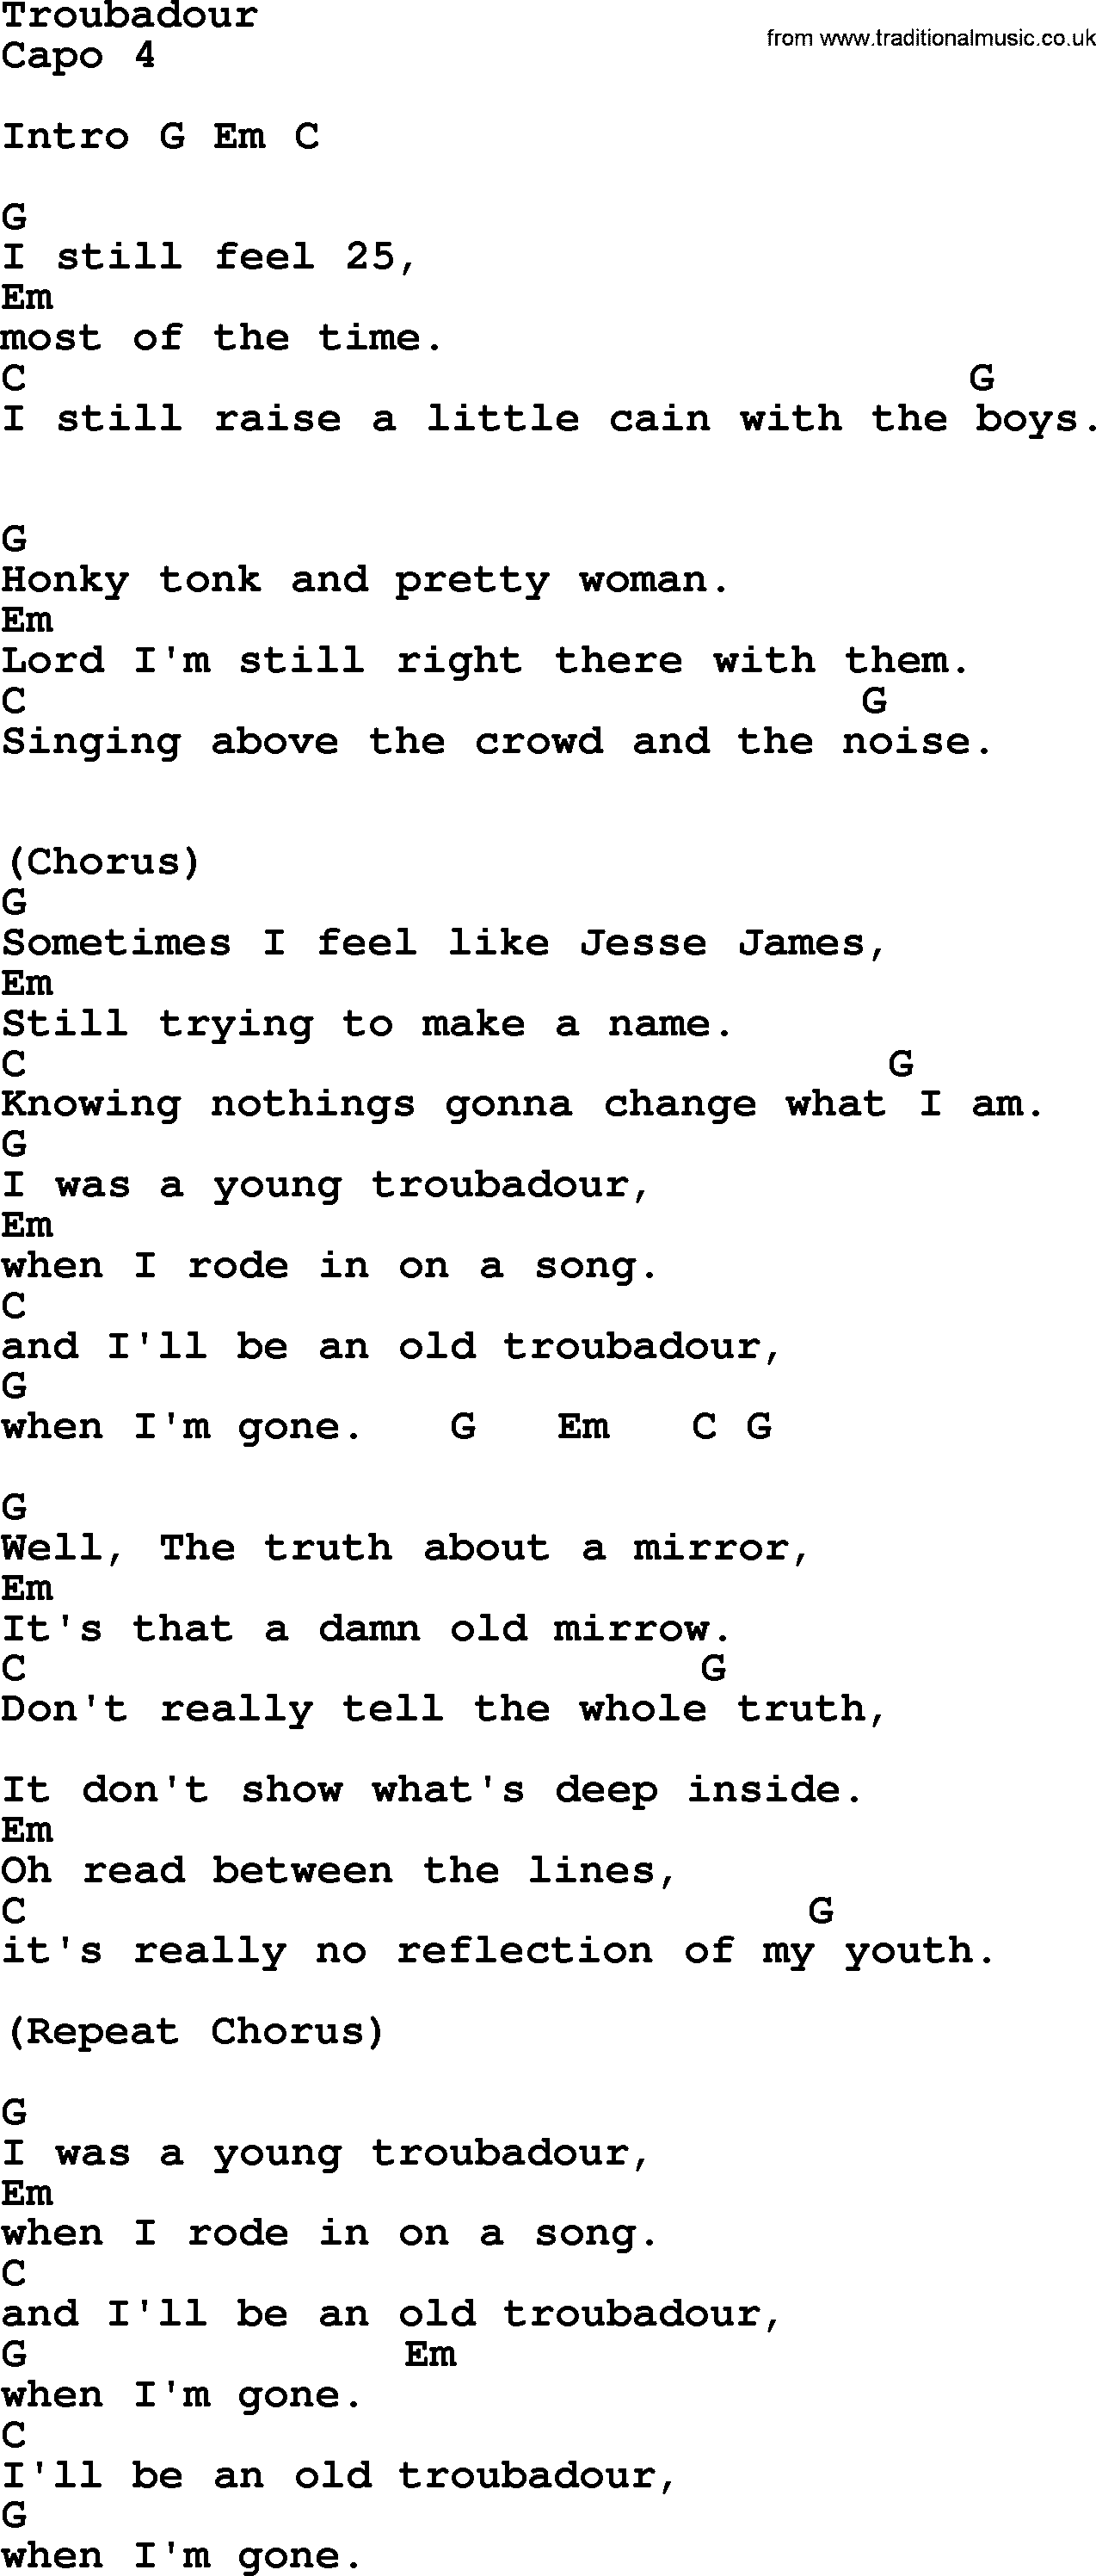 George Strait song: Troubadour, lyrics and chords